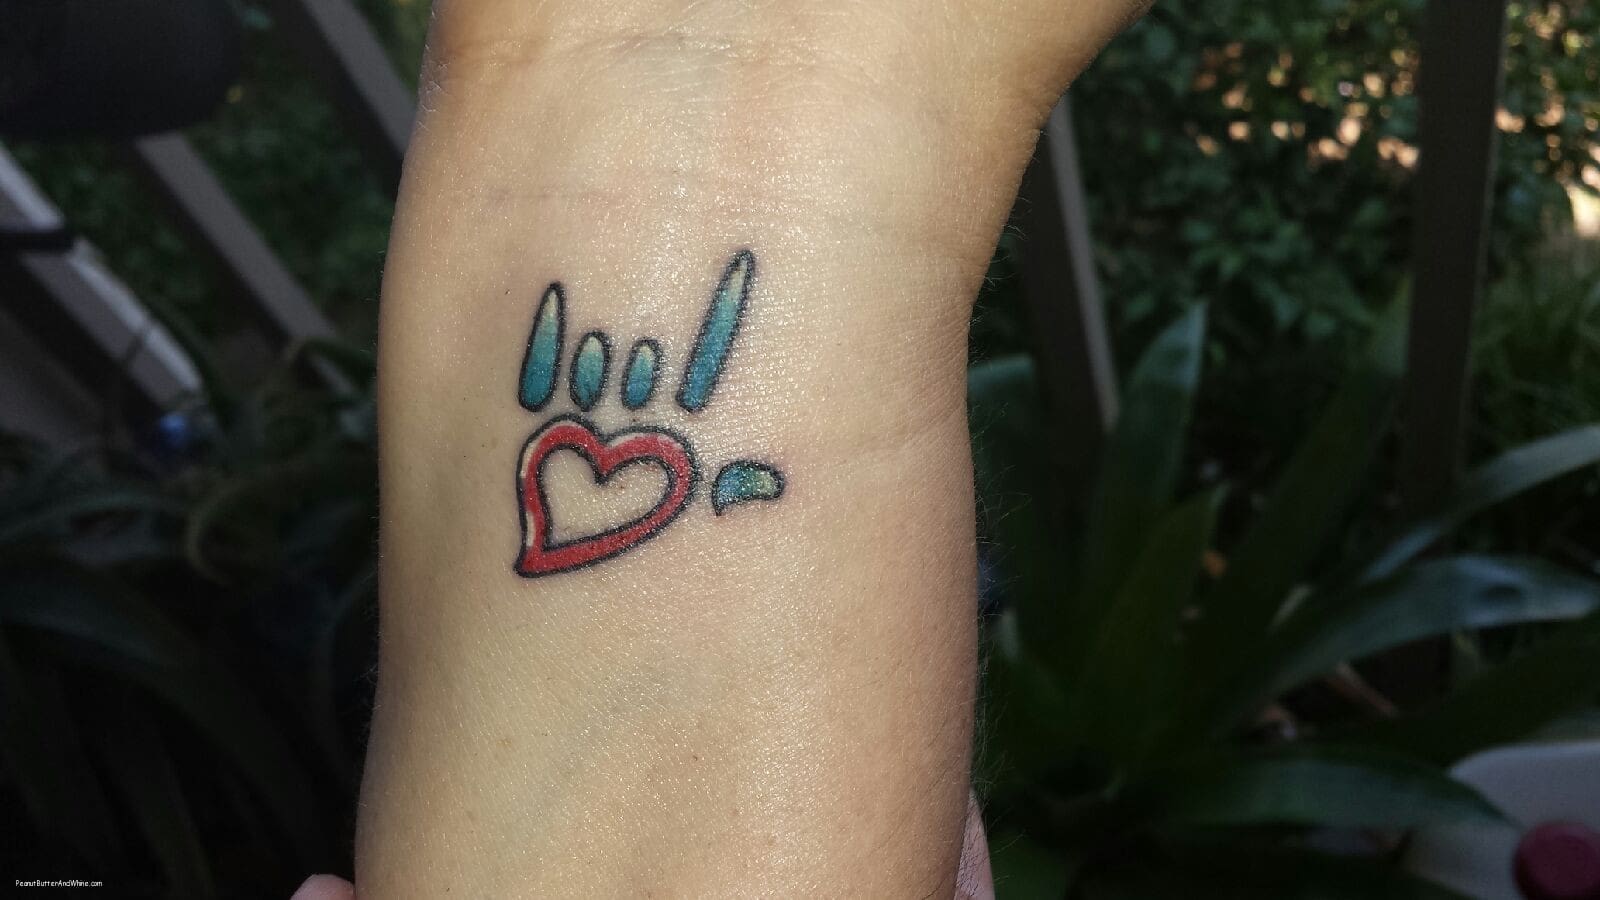 Tattoo I love you symbol